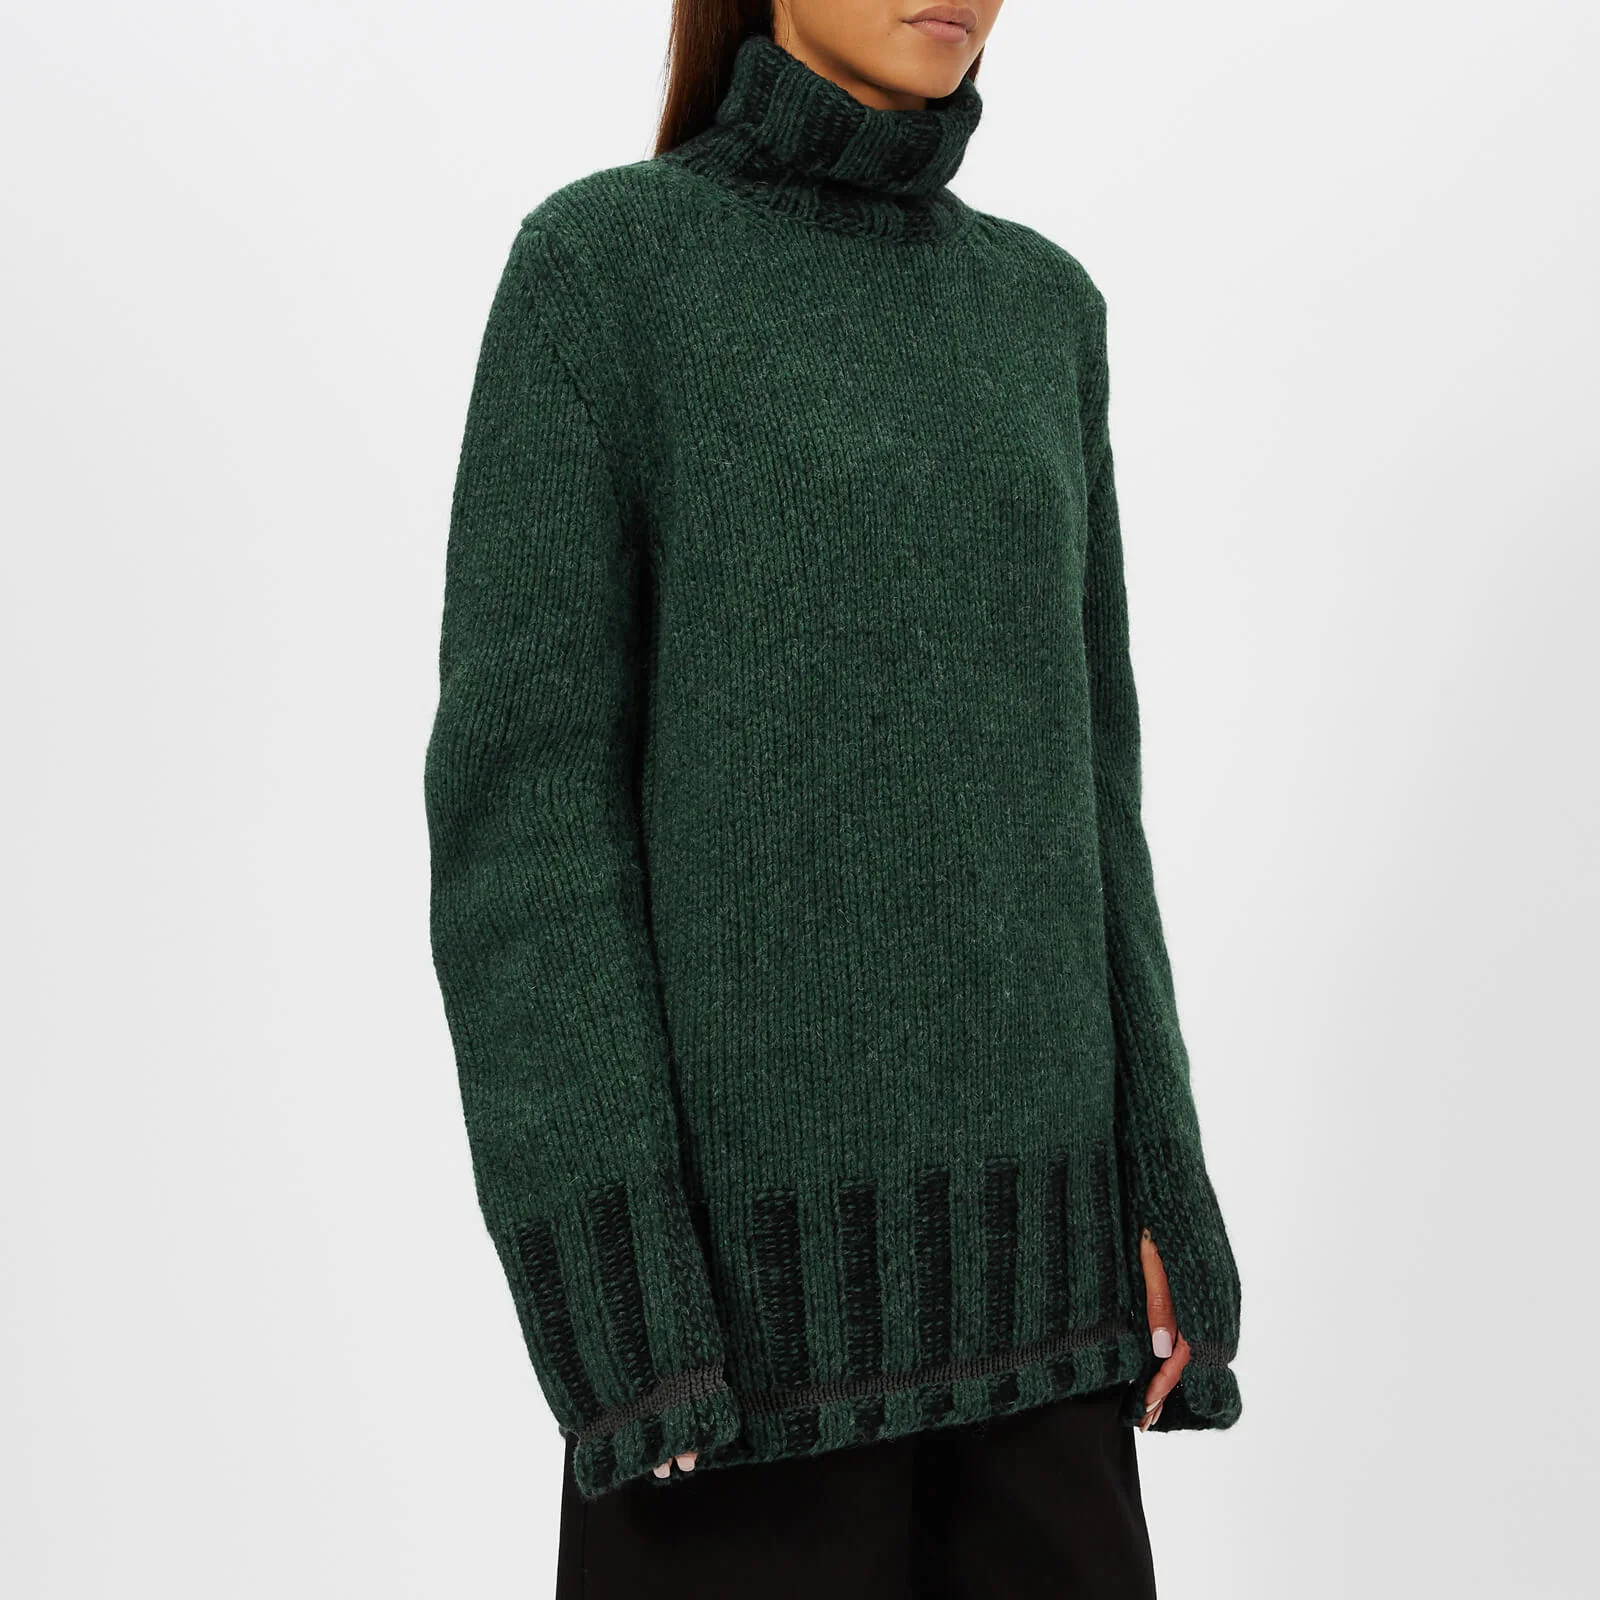 MM6 Maison Margiela Women's Polo Neck Knitted Jumper - Green/Black Image 1